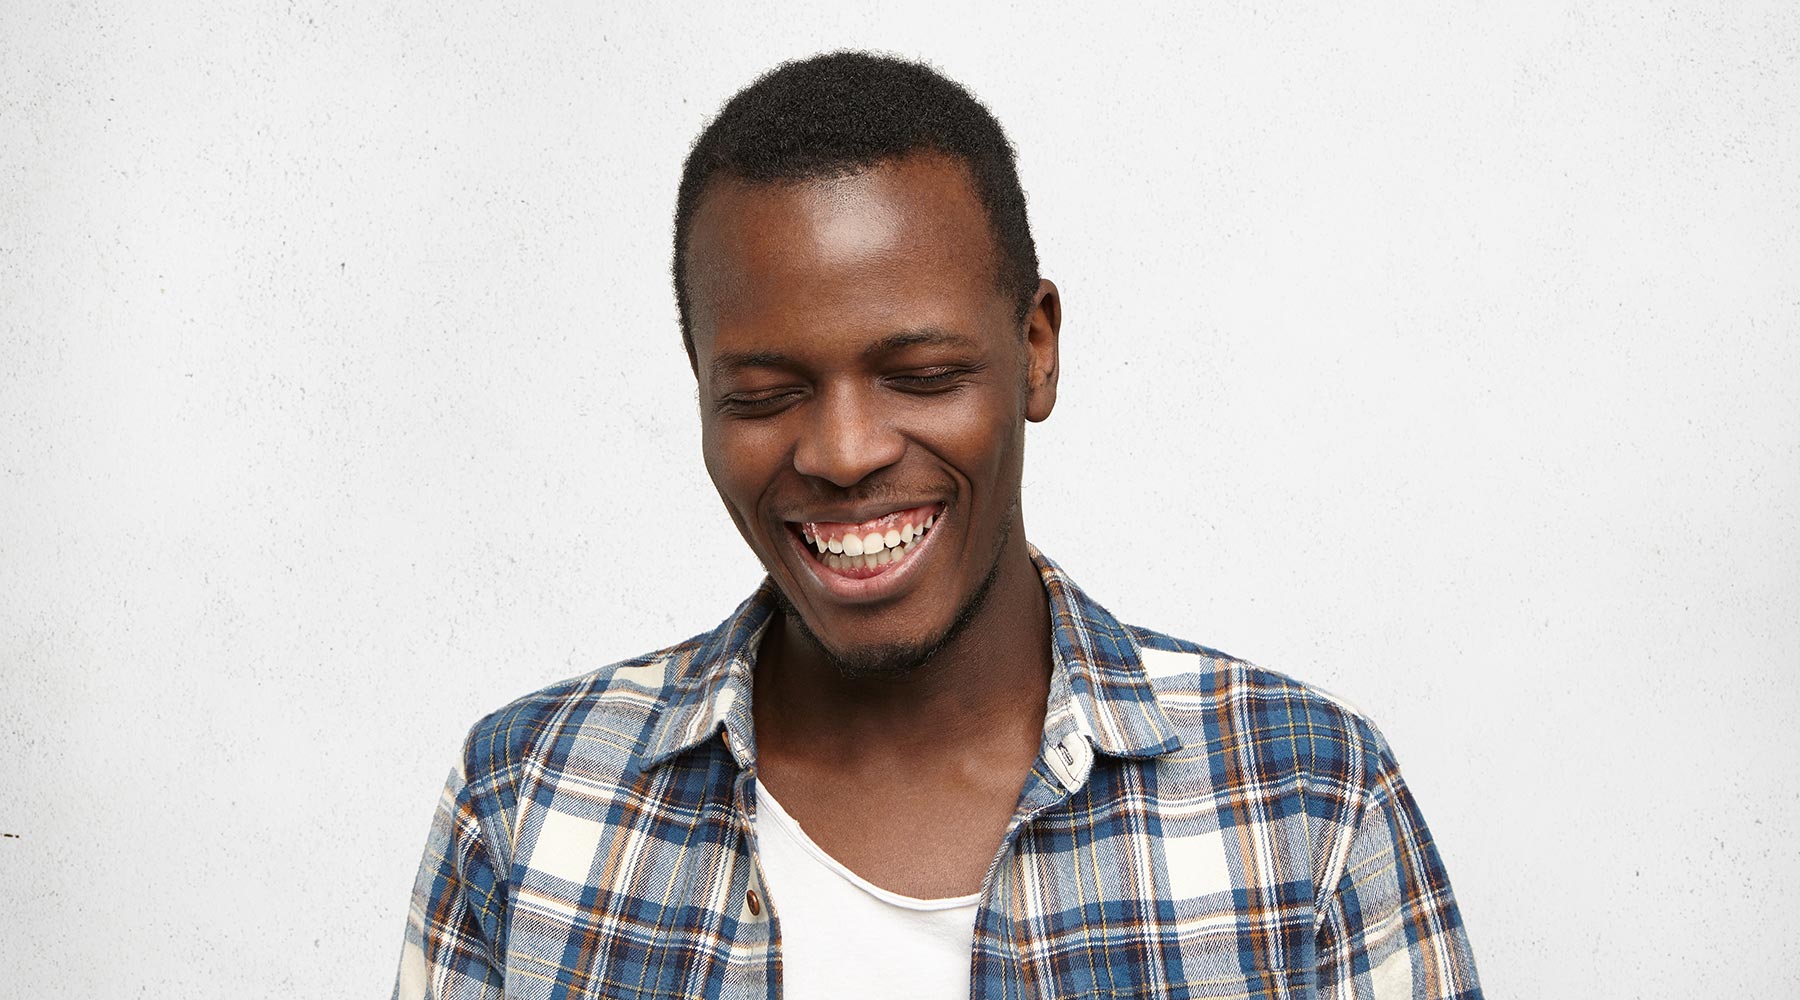 Do you show excessive gums when you smile?